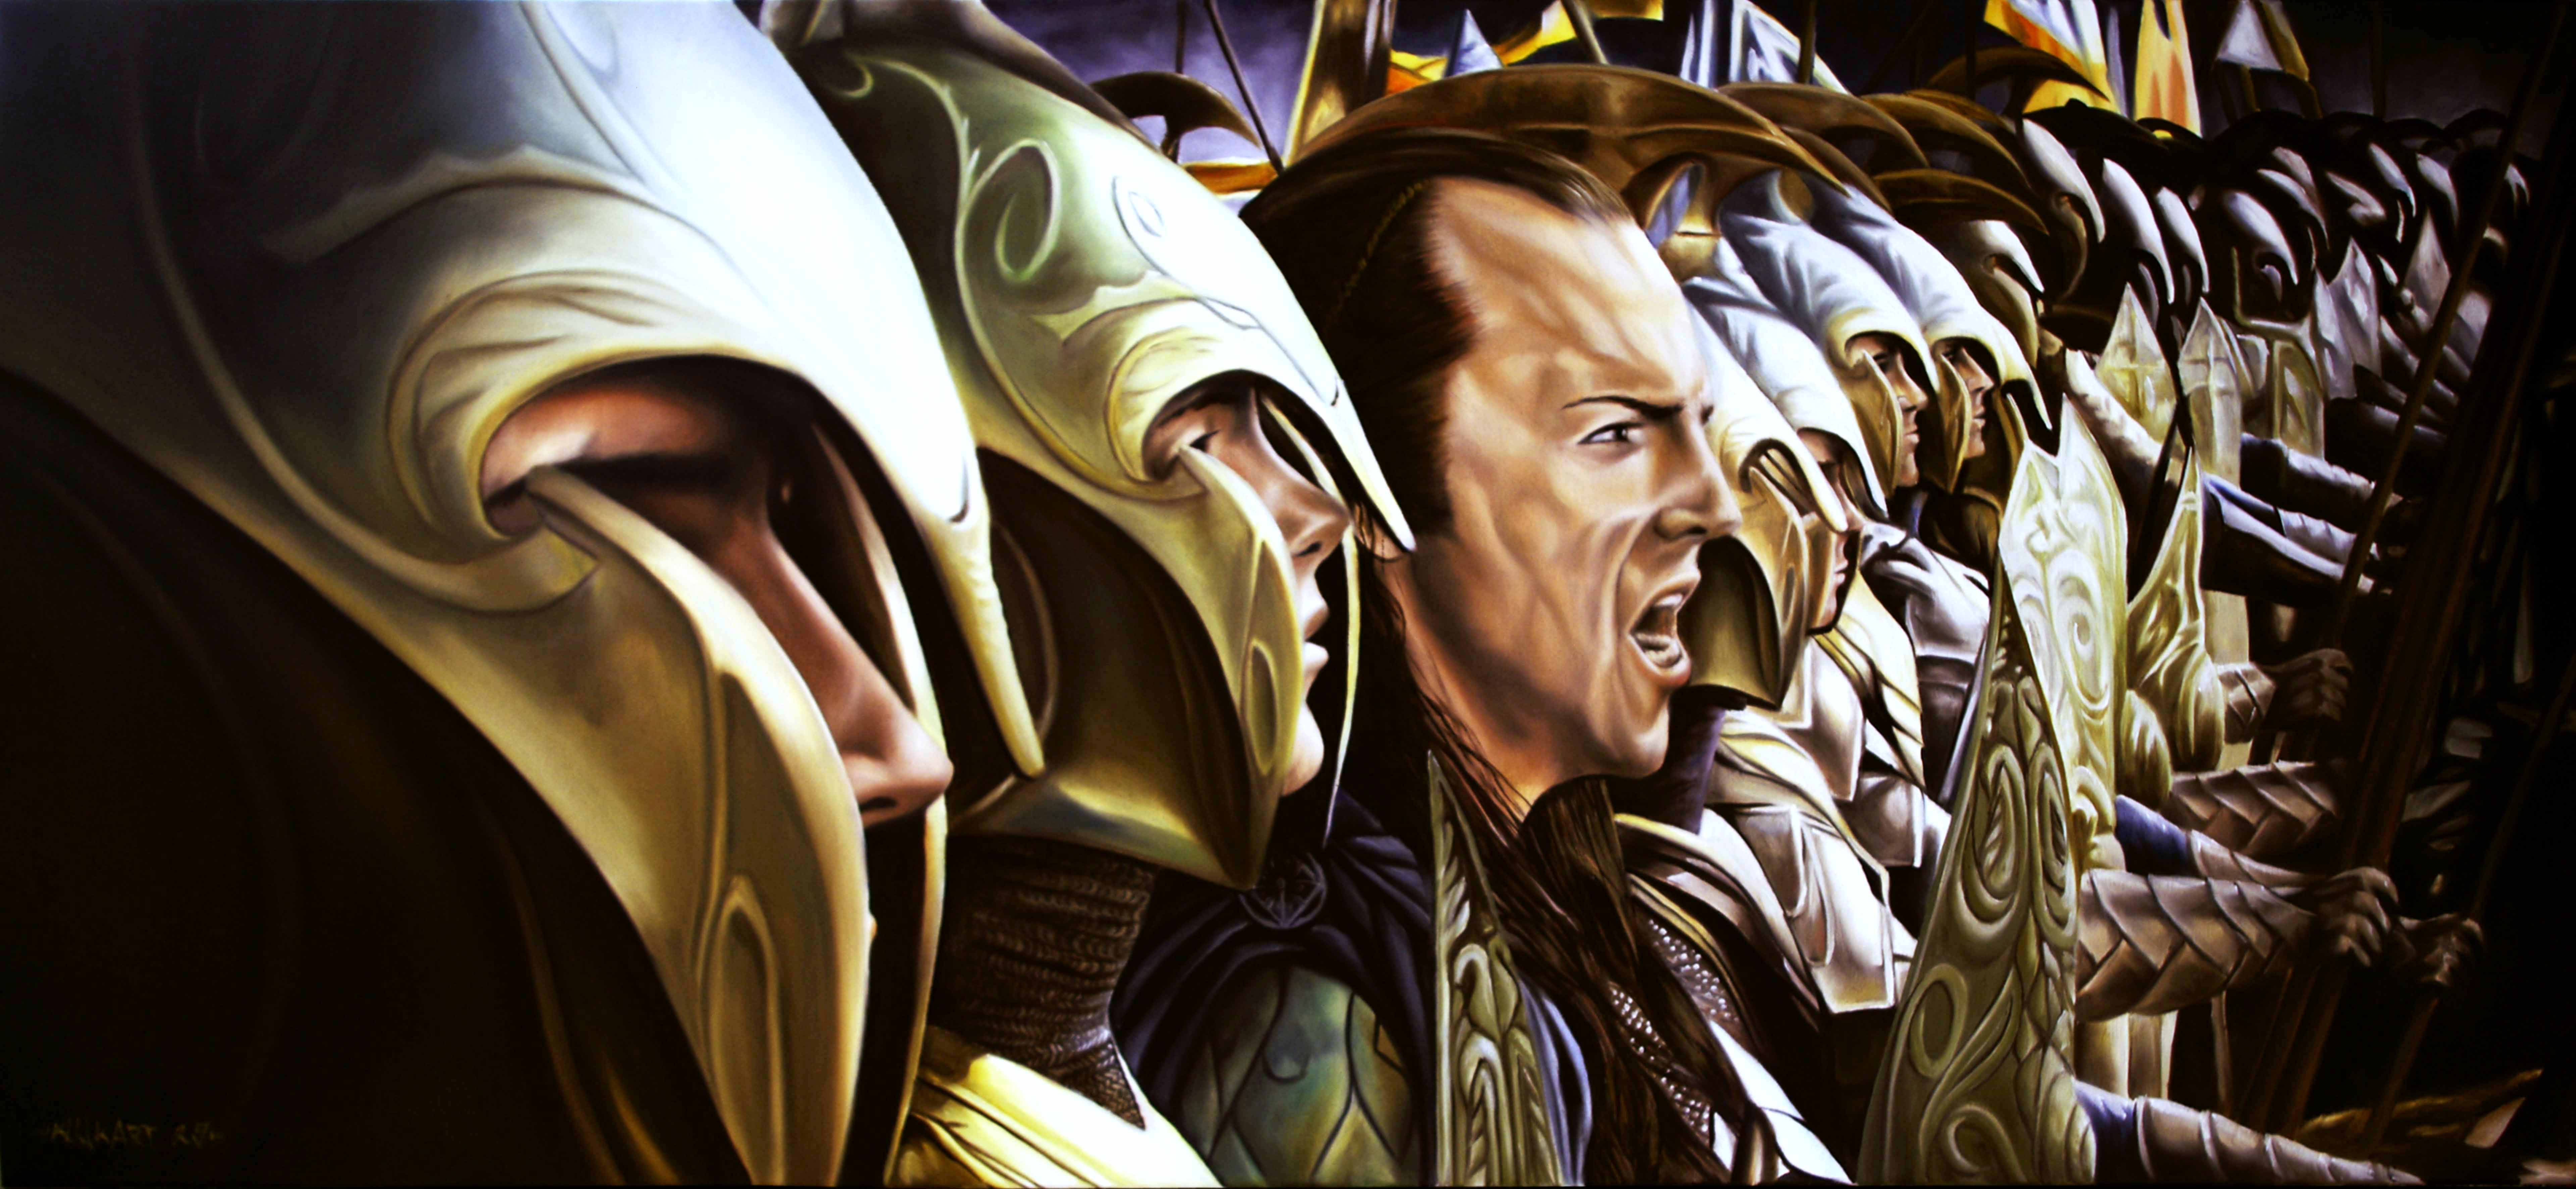 The Lord of the Rings, elves, artwork, Elrond - desktop wallpaper